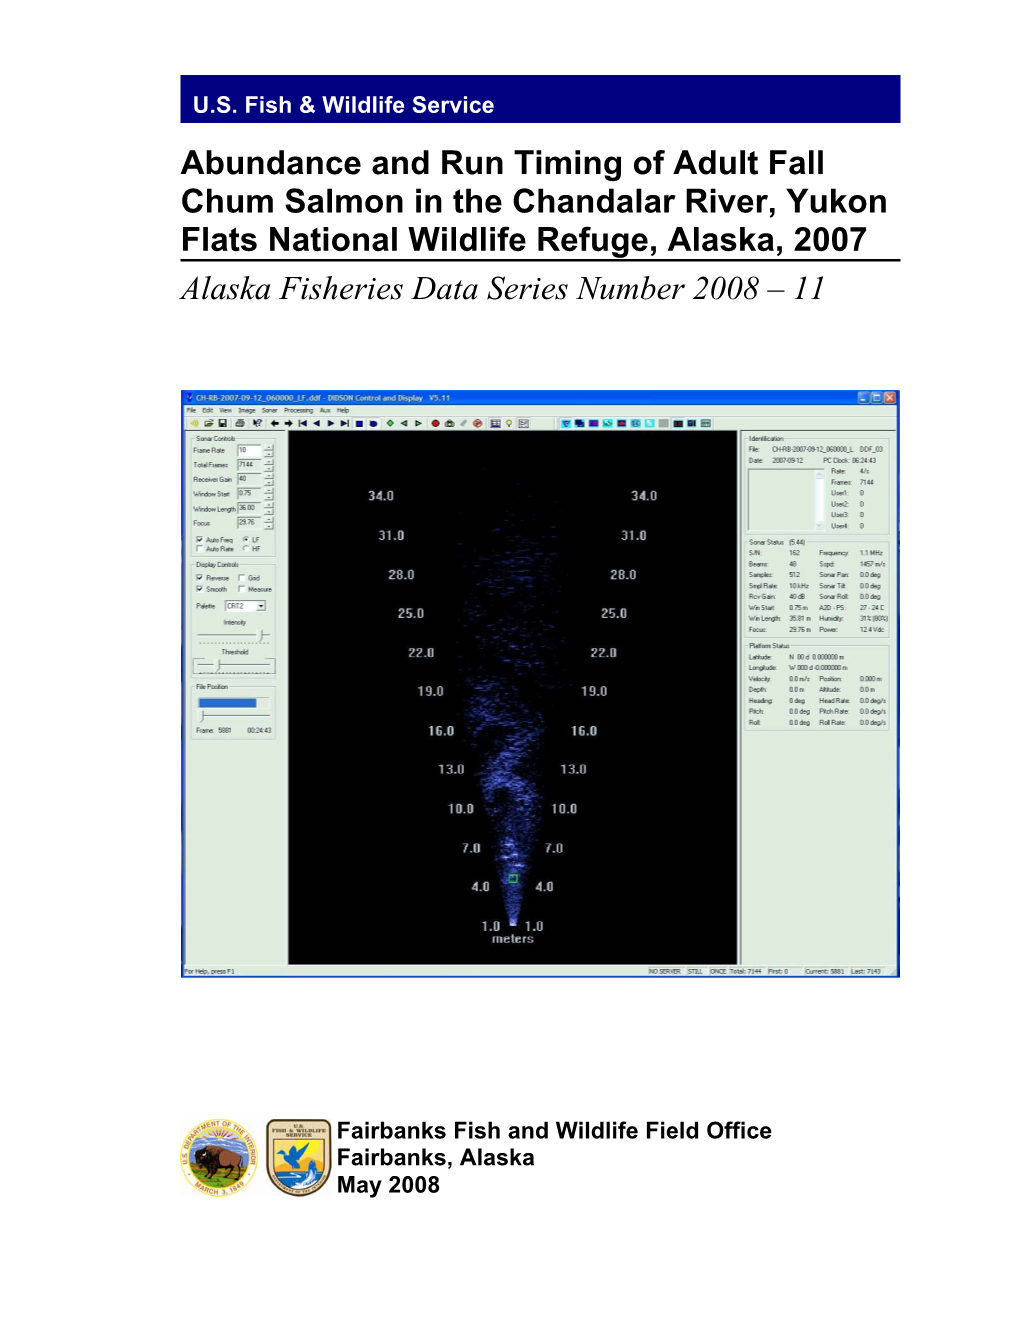 Abundance and Run Timing of Adult Fall Chum Salmon in the Chandalar